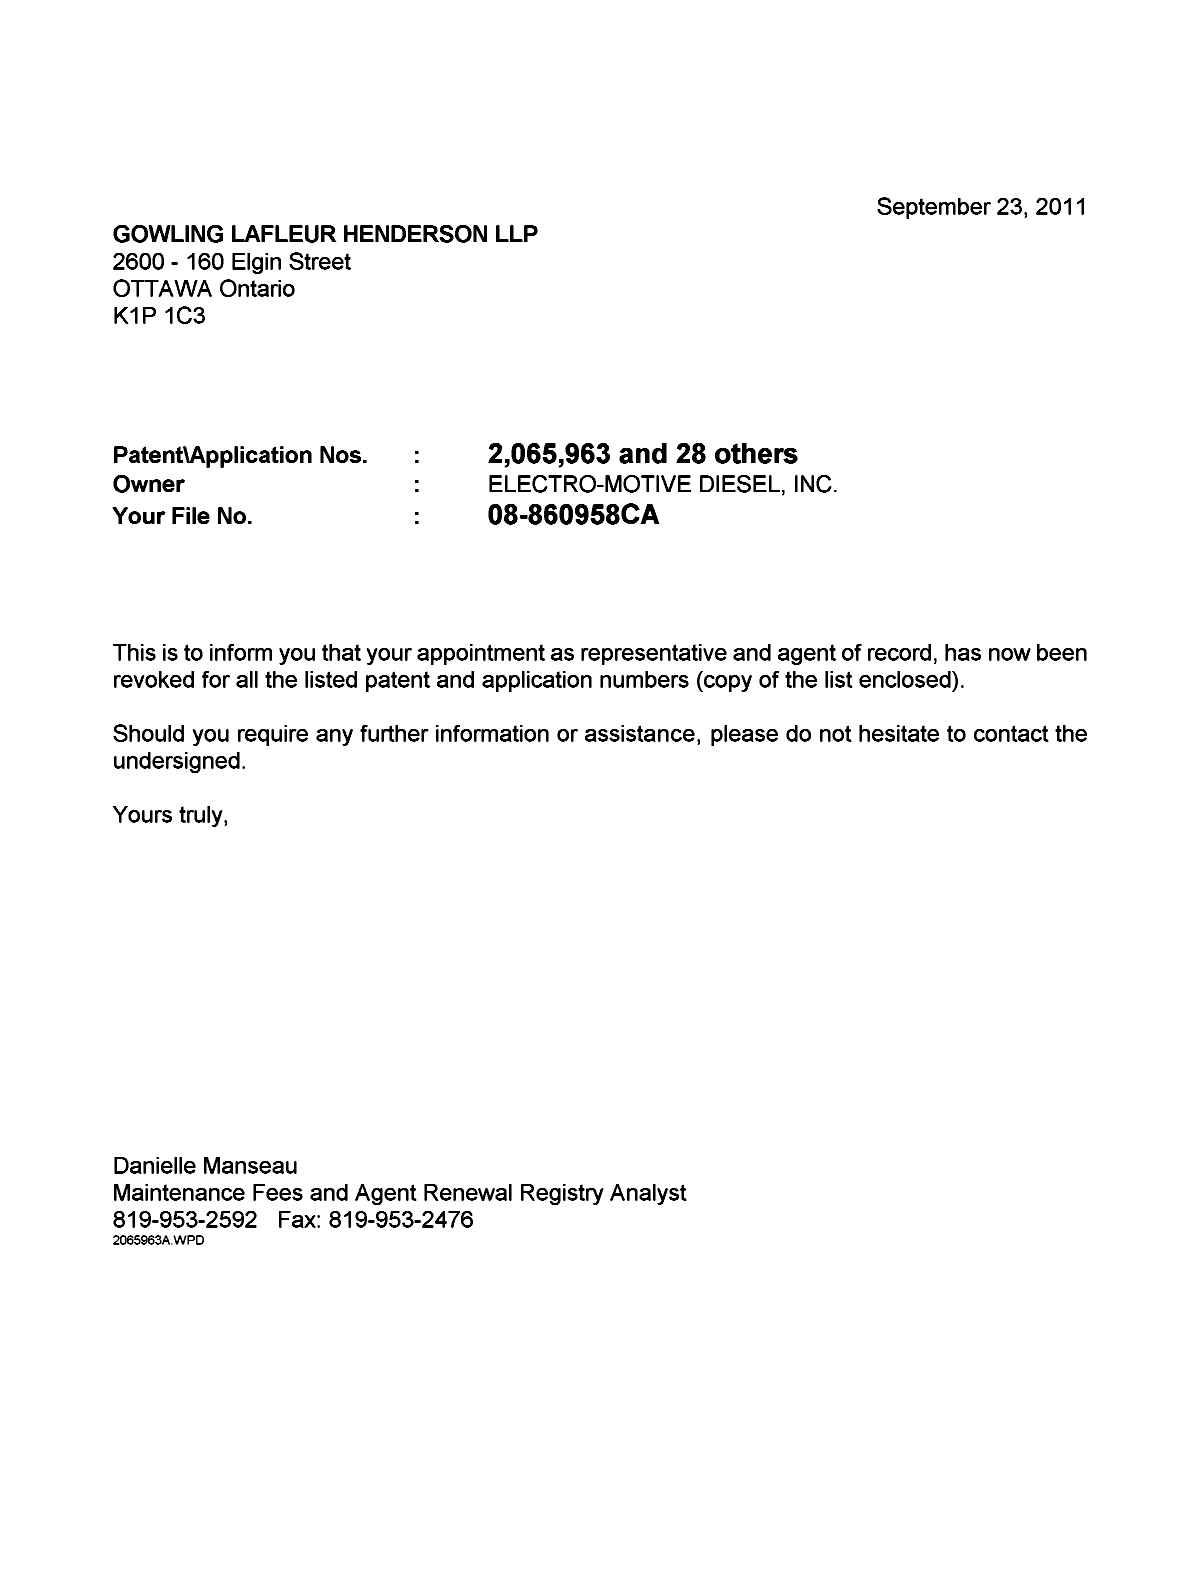 Canadian Patent Document 2730349. Correspondence 20110923. Image 1 of 1